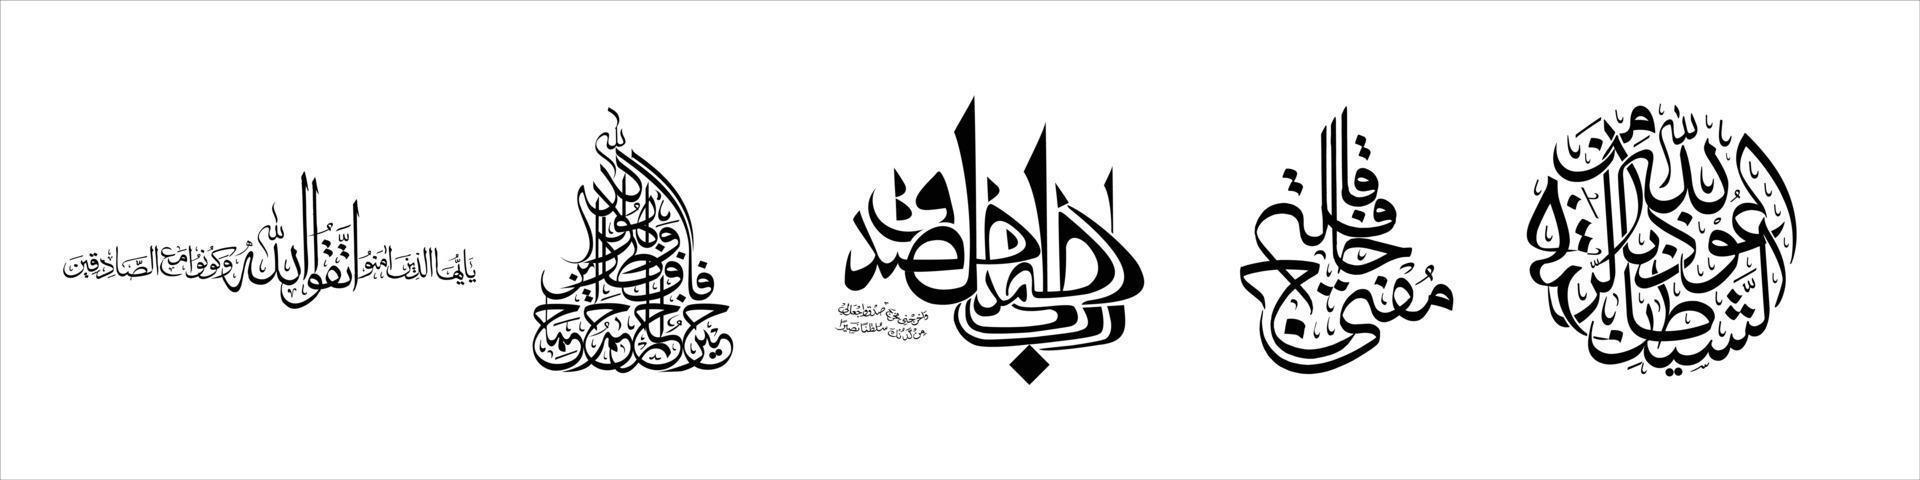 caligrafía árabe creativa, ilustración vectorial vector